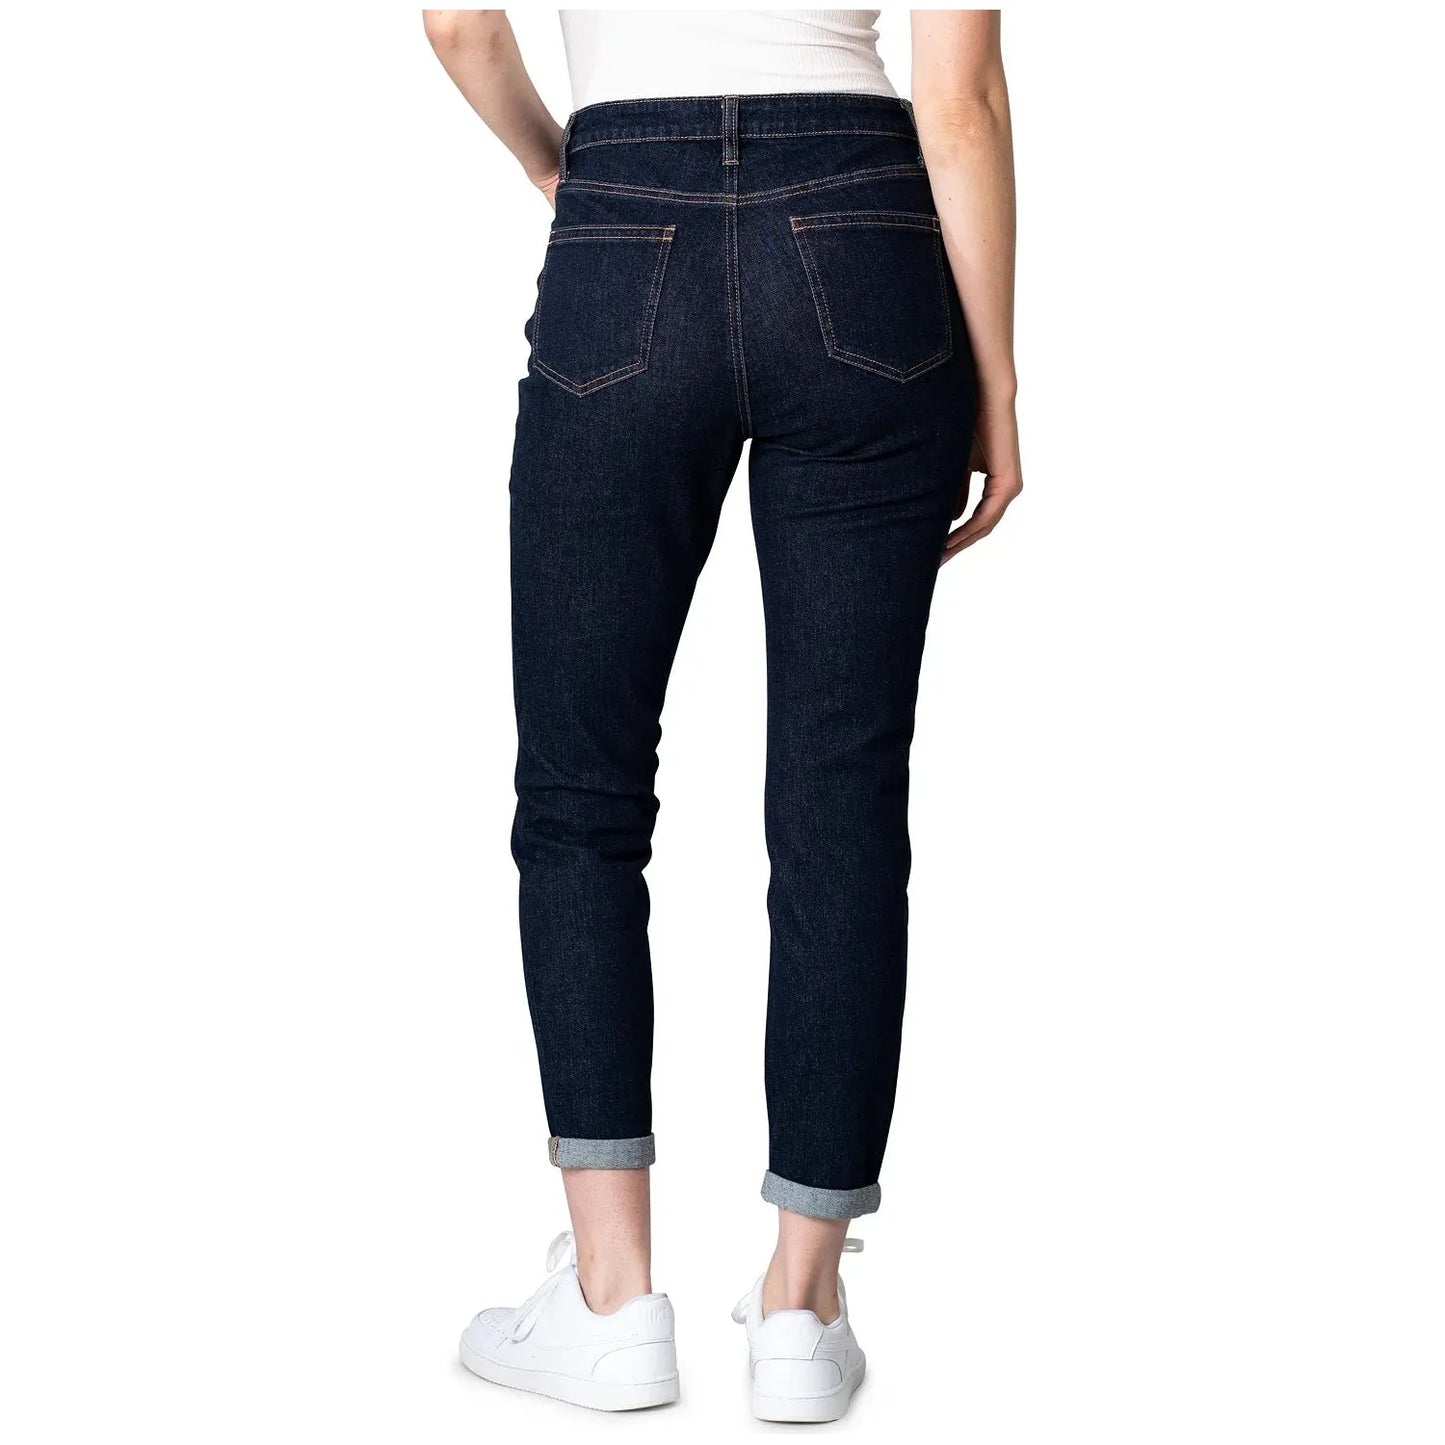 Gemma Rae Juniors High-Rise Mom Jeans, Blue, Size: 11